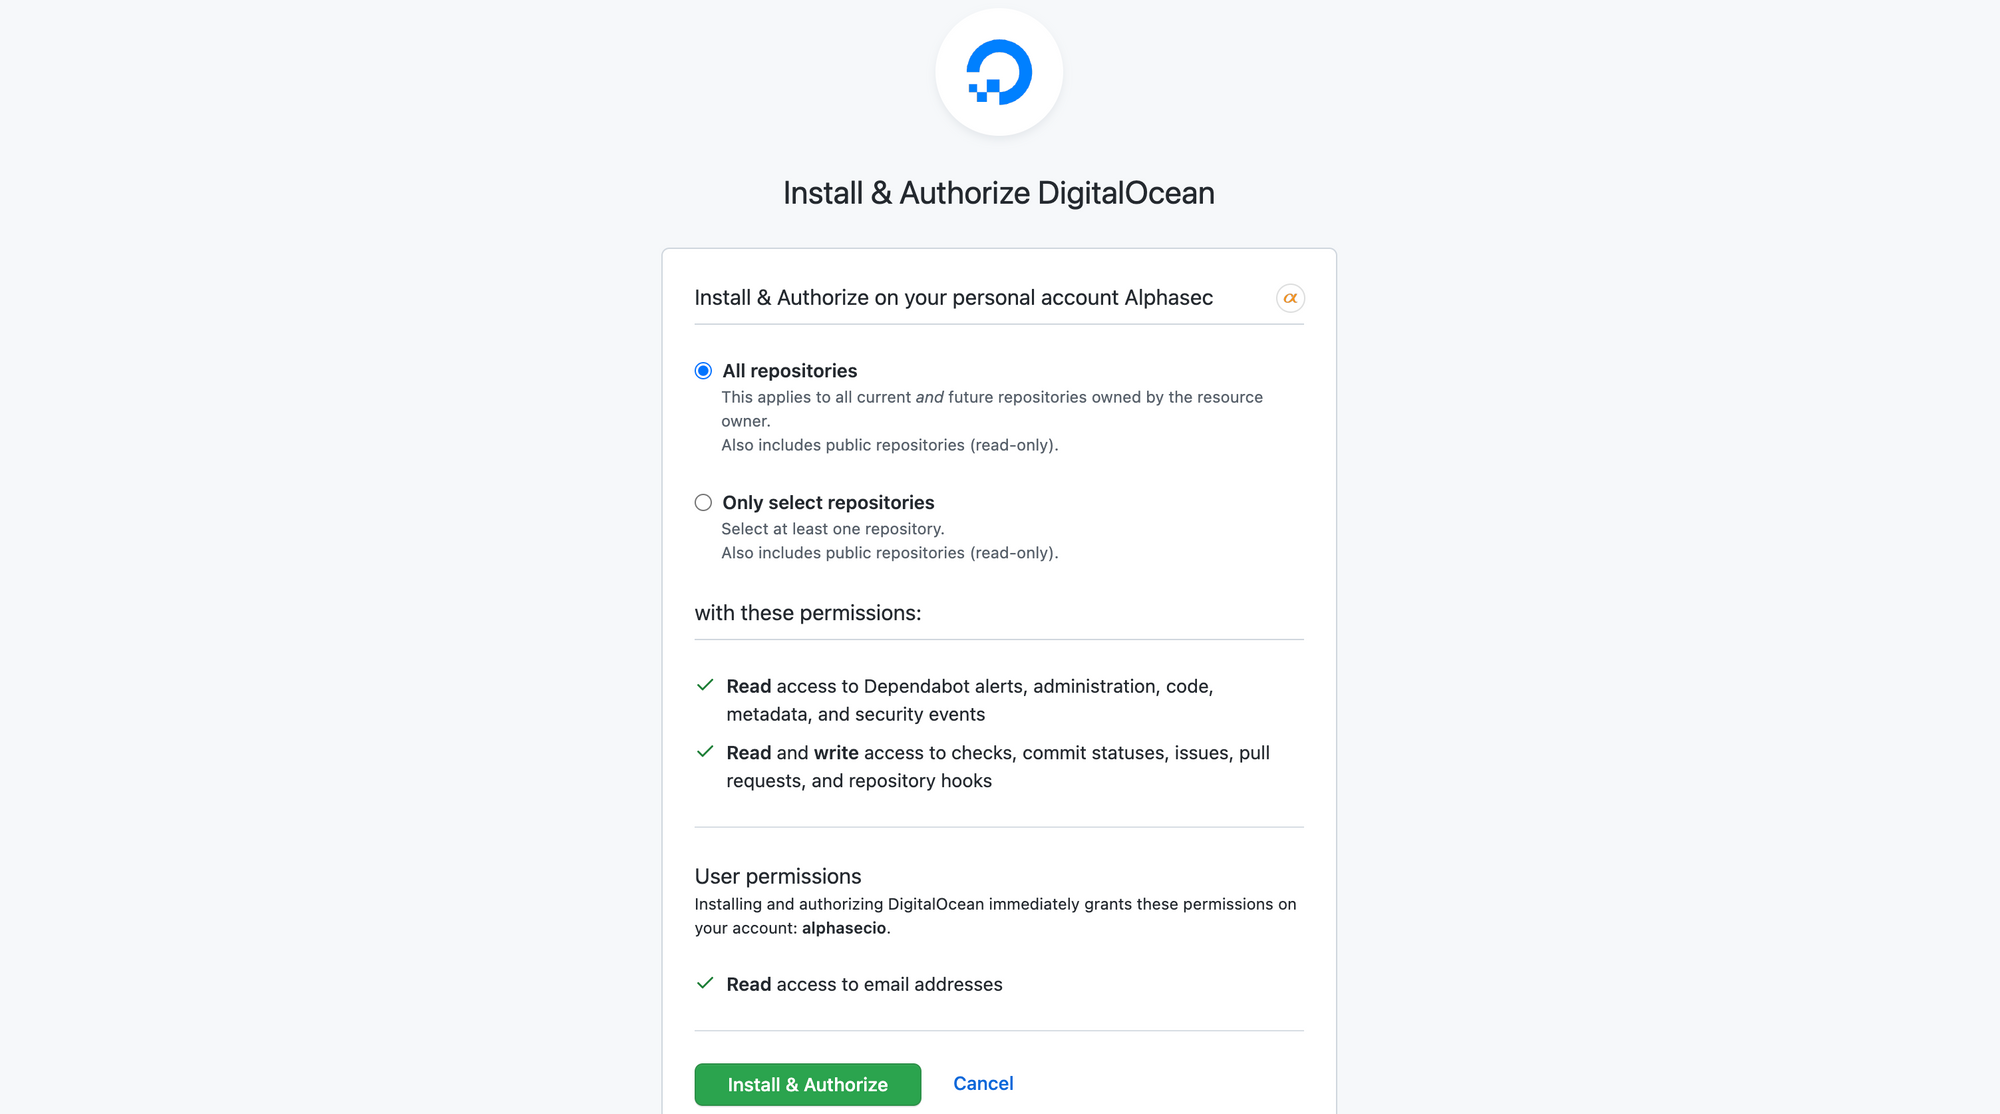 Install & authorize DigitalOcean on GitHub